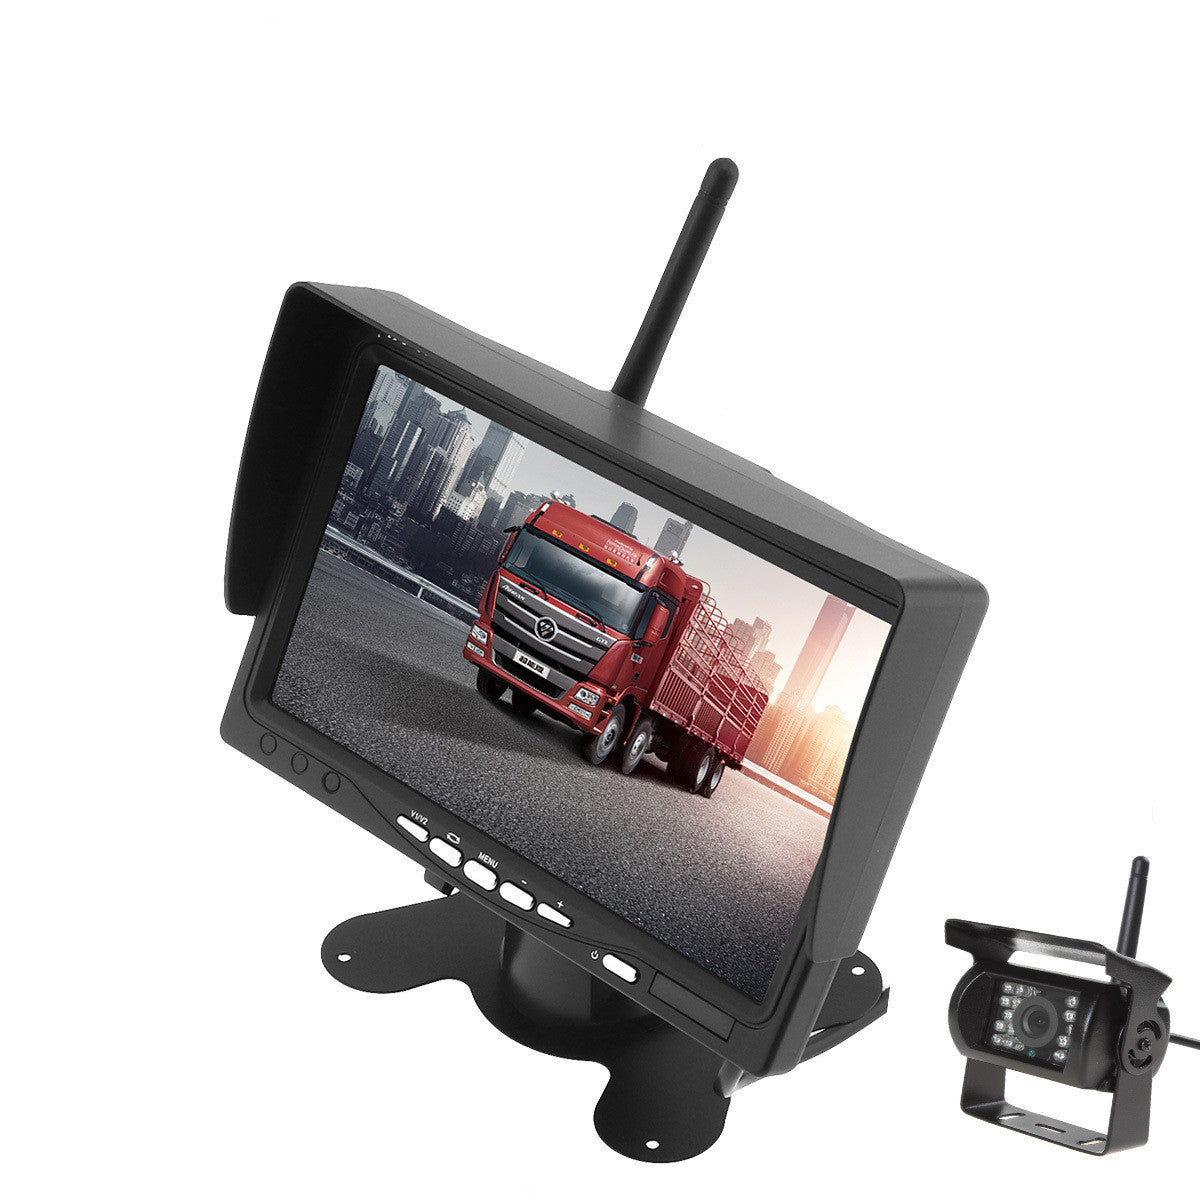 Forklift Truck Harvester 7 Inch Car Wireless Reversing Video Display Camera (YWD 701WF) - Auto GoShop